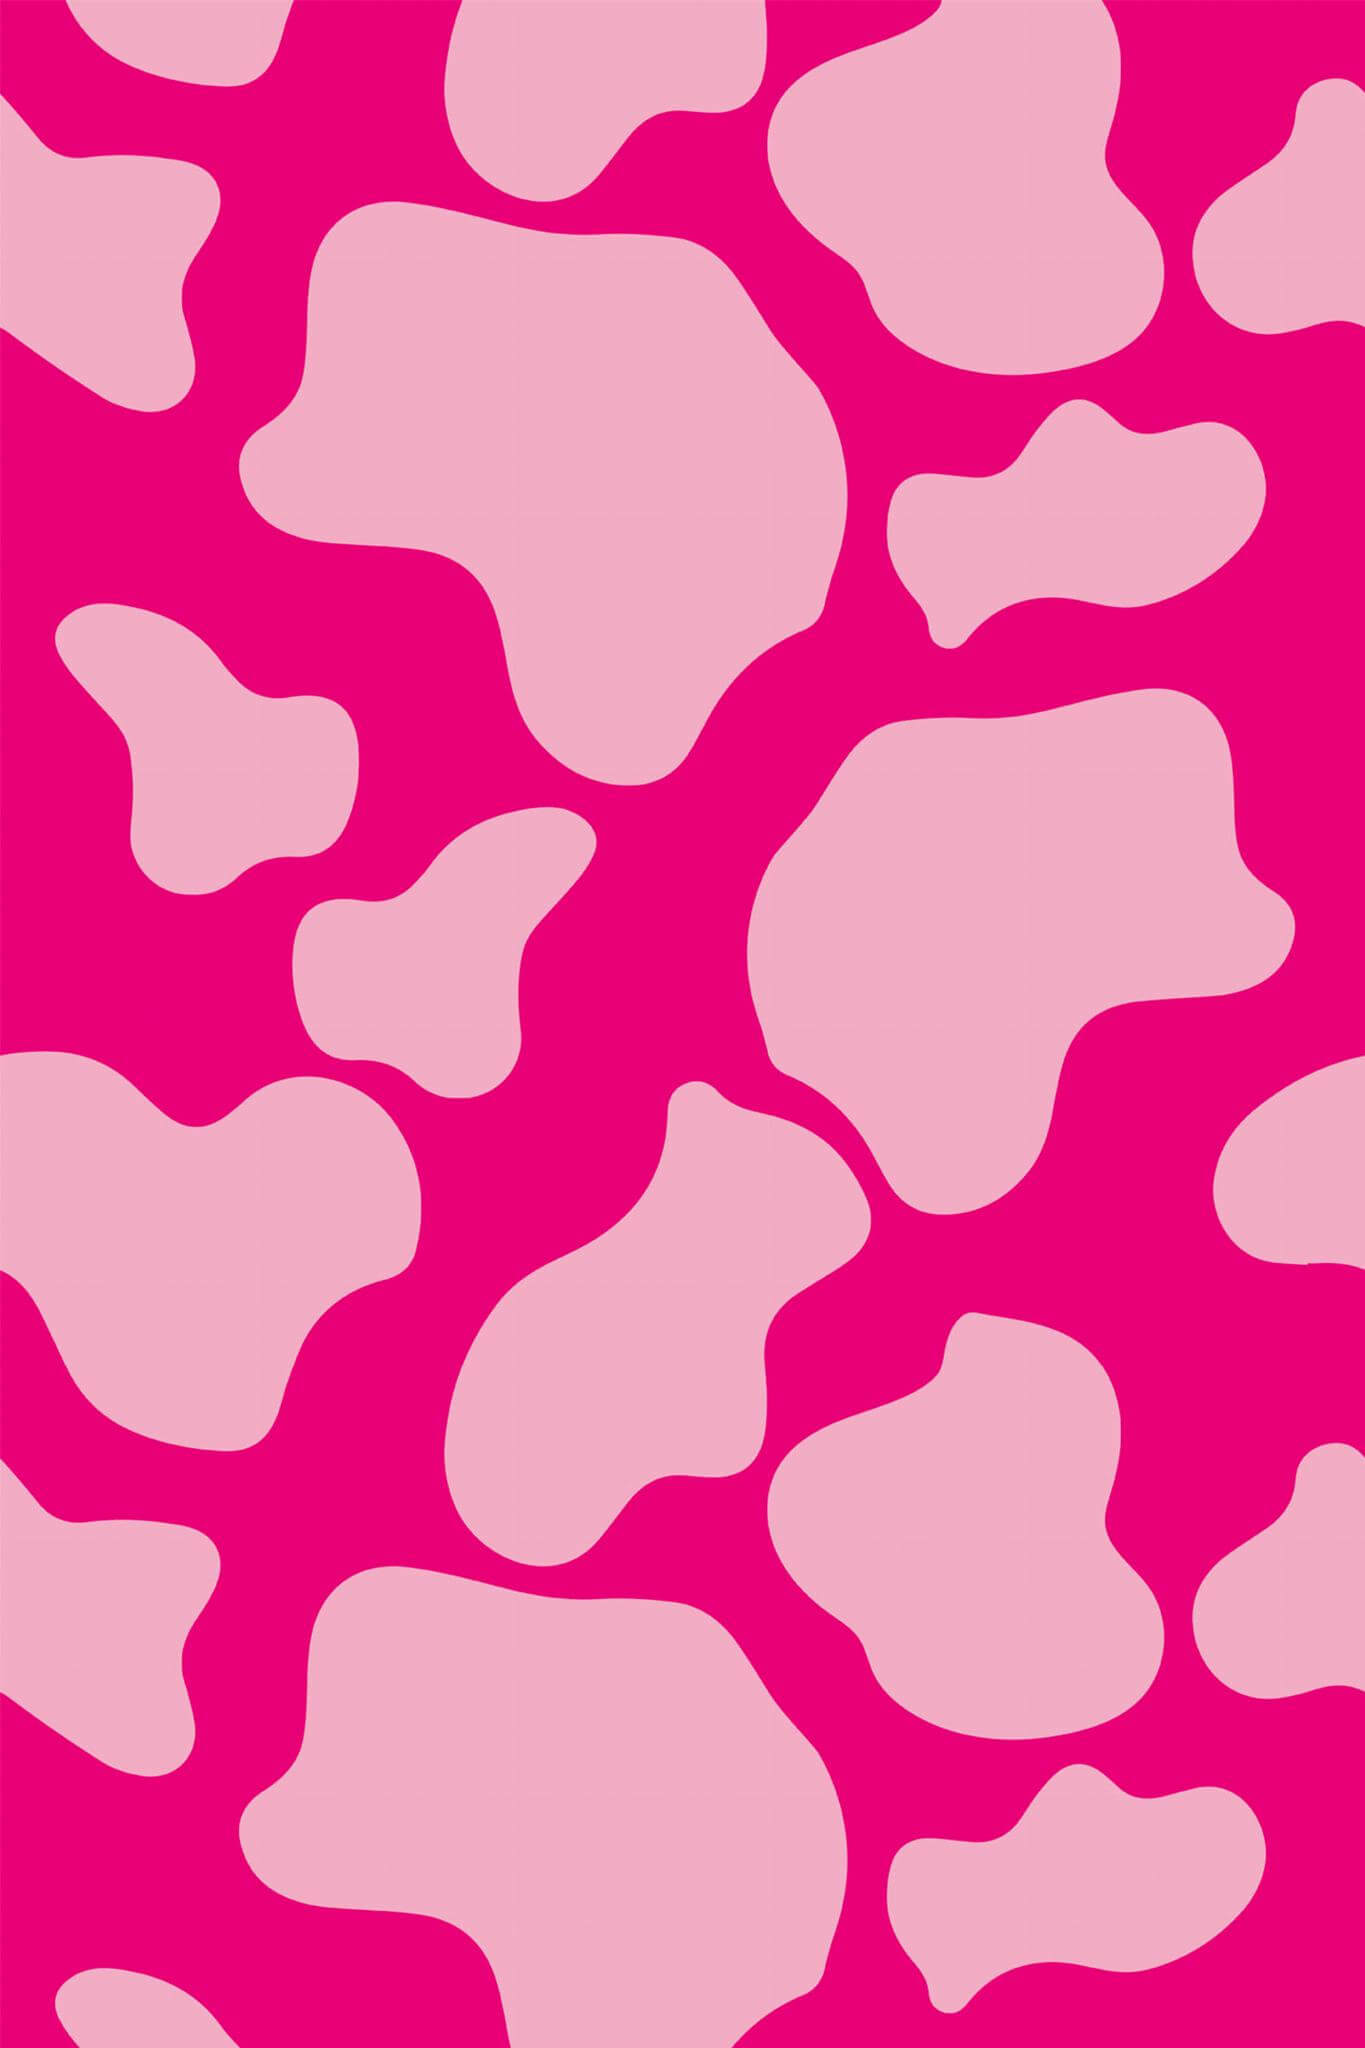 Pink cow pattern